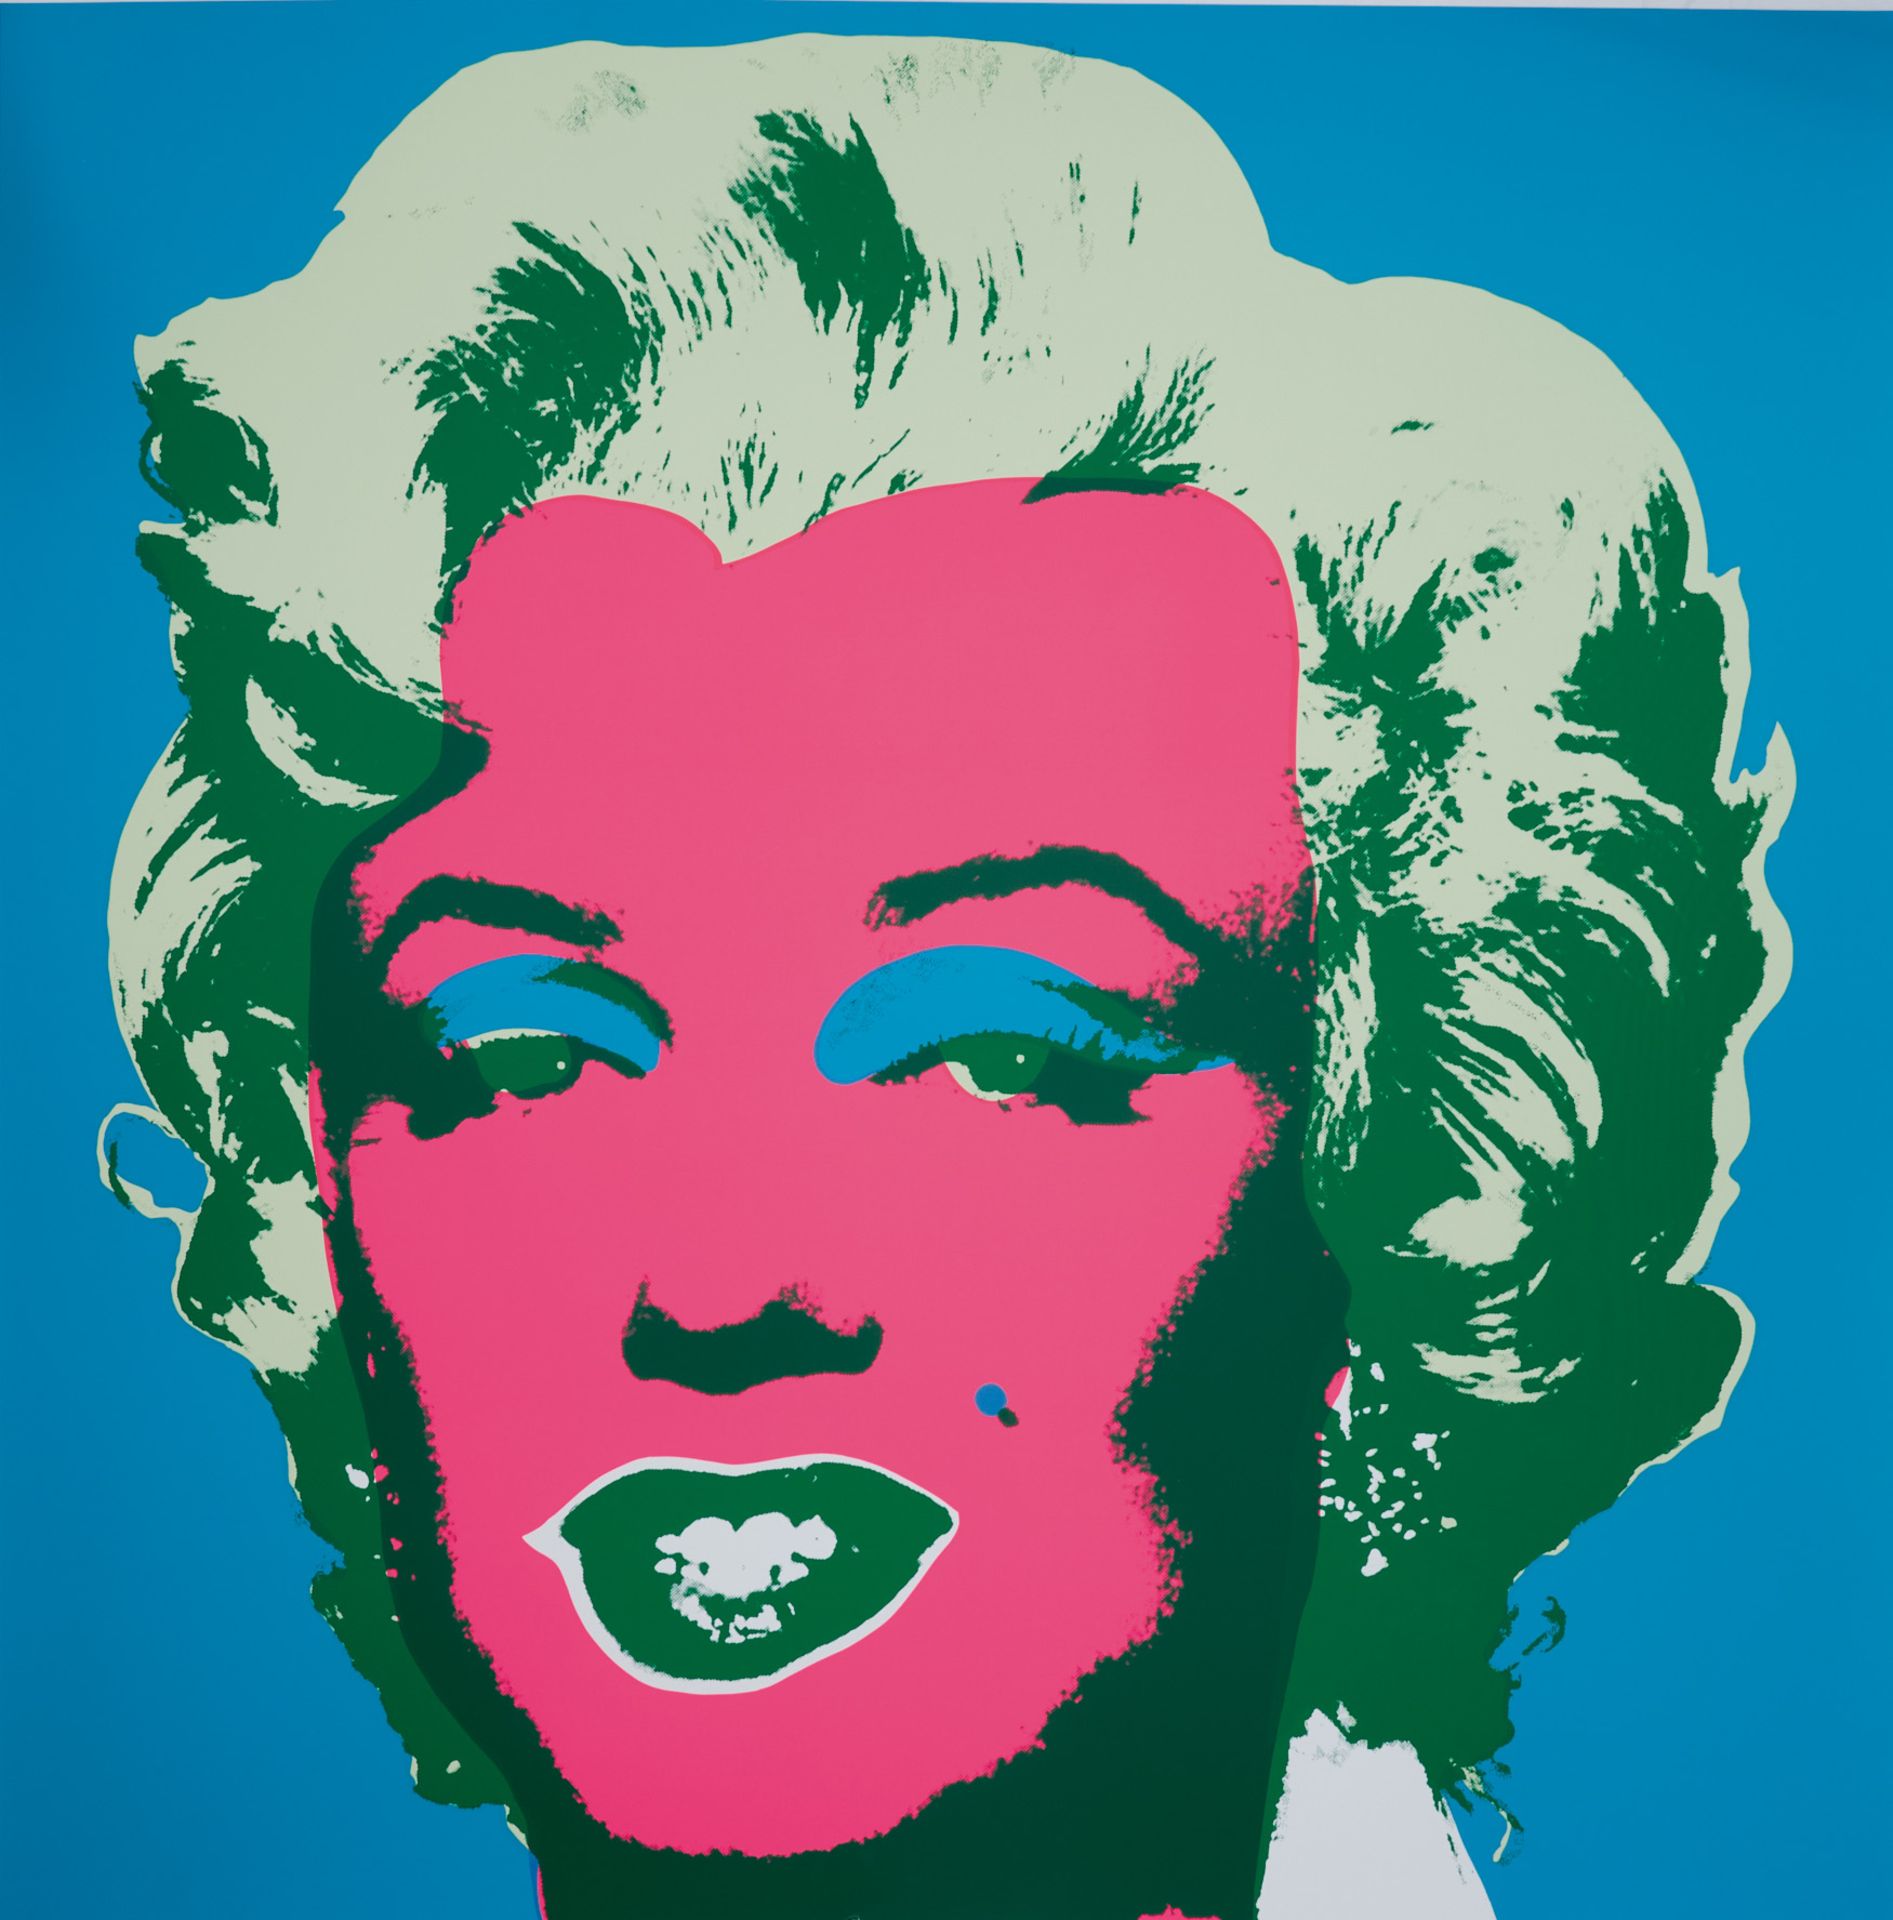 Warhol, Andy - (Pittsburgh 1928-1987 New York, nach),